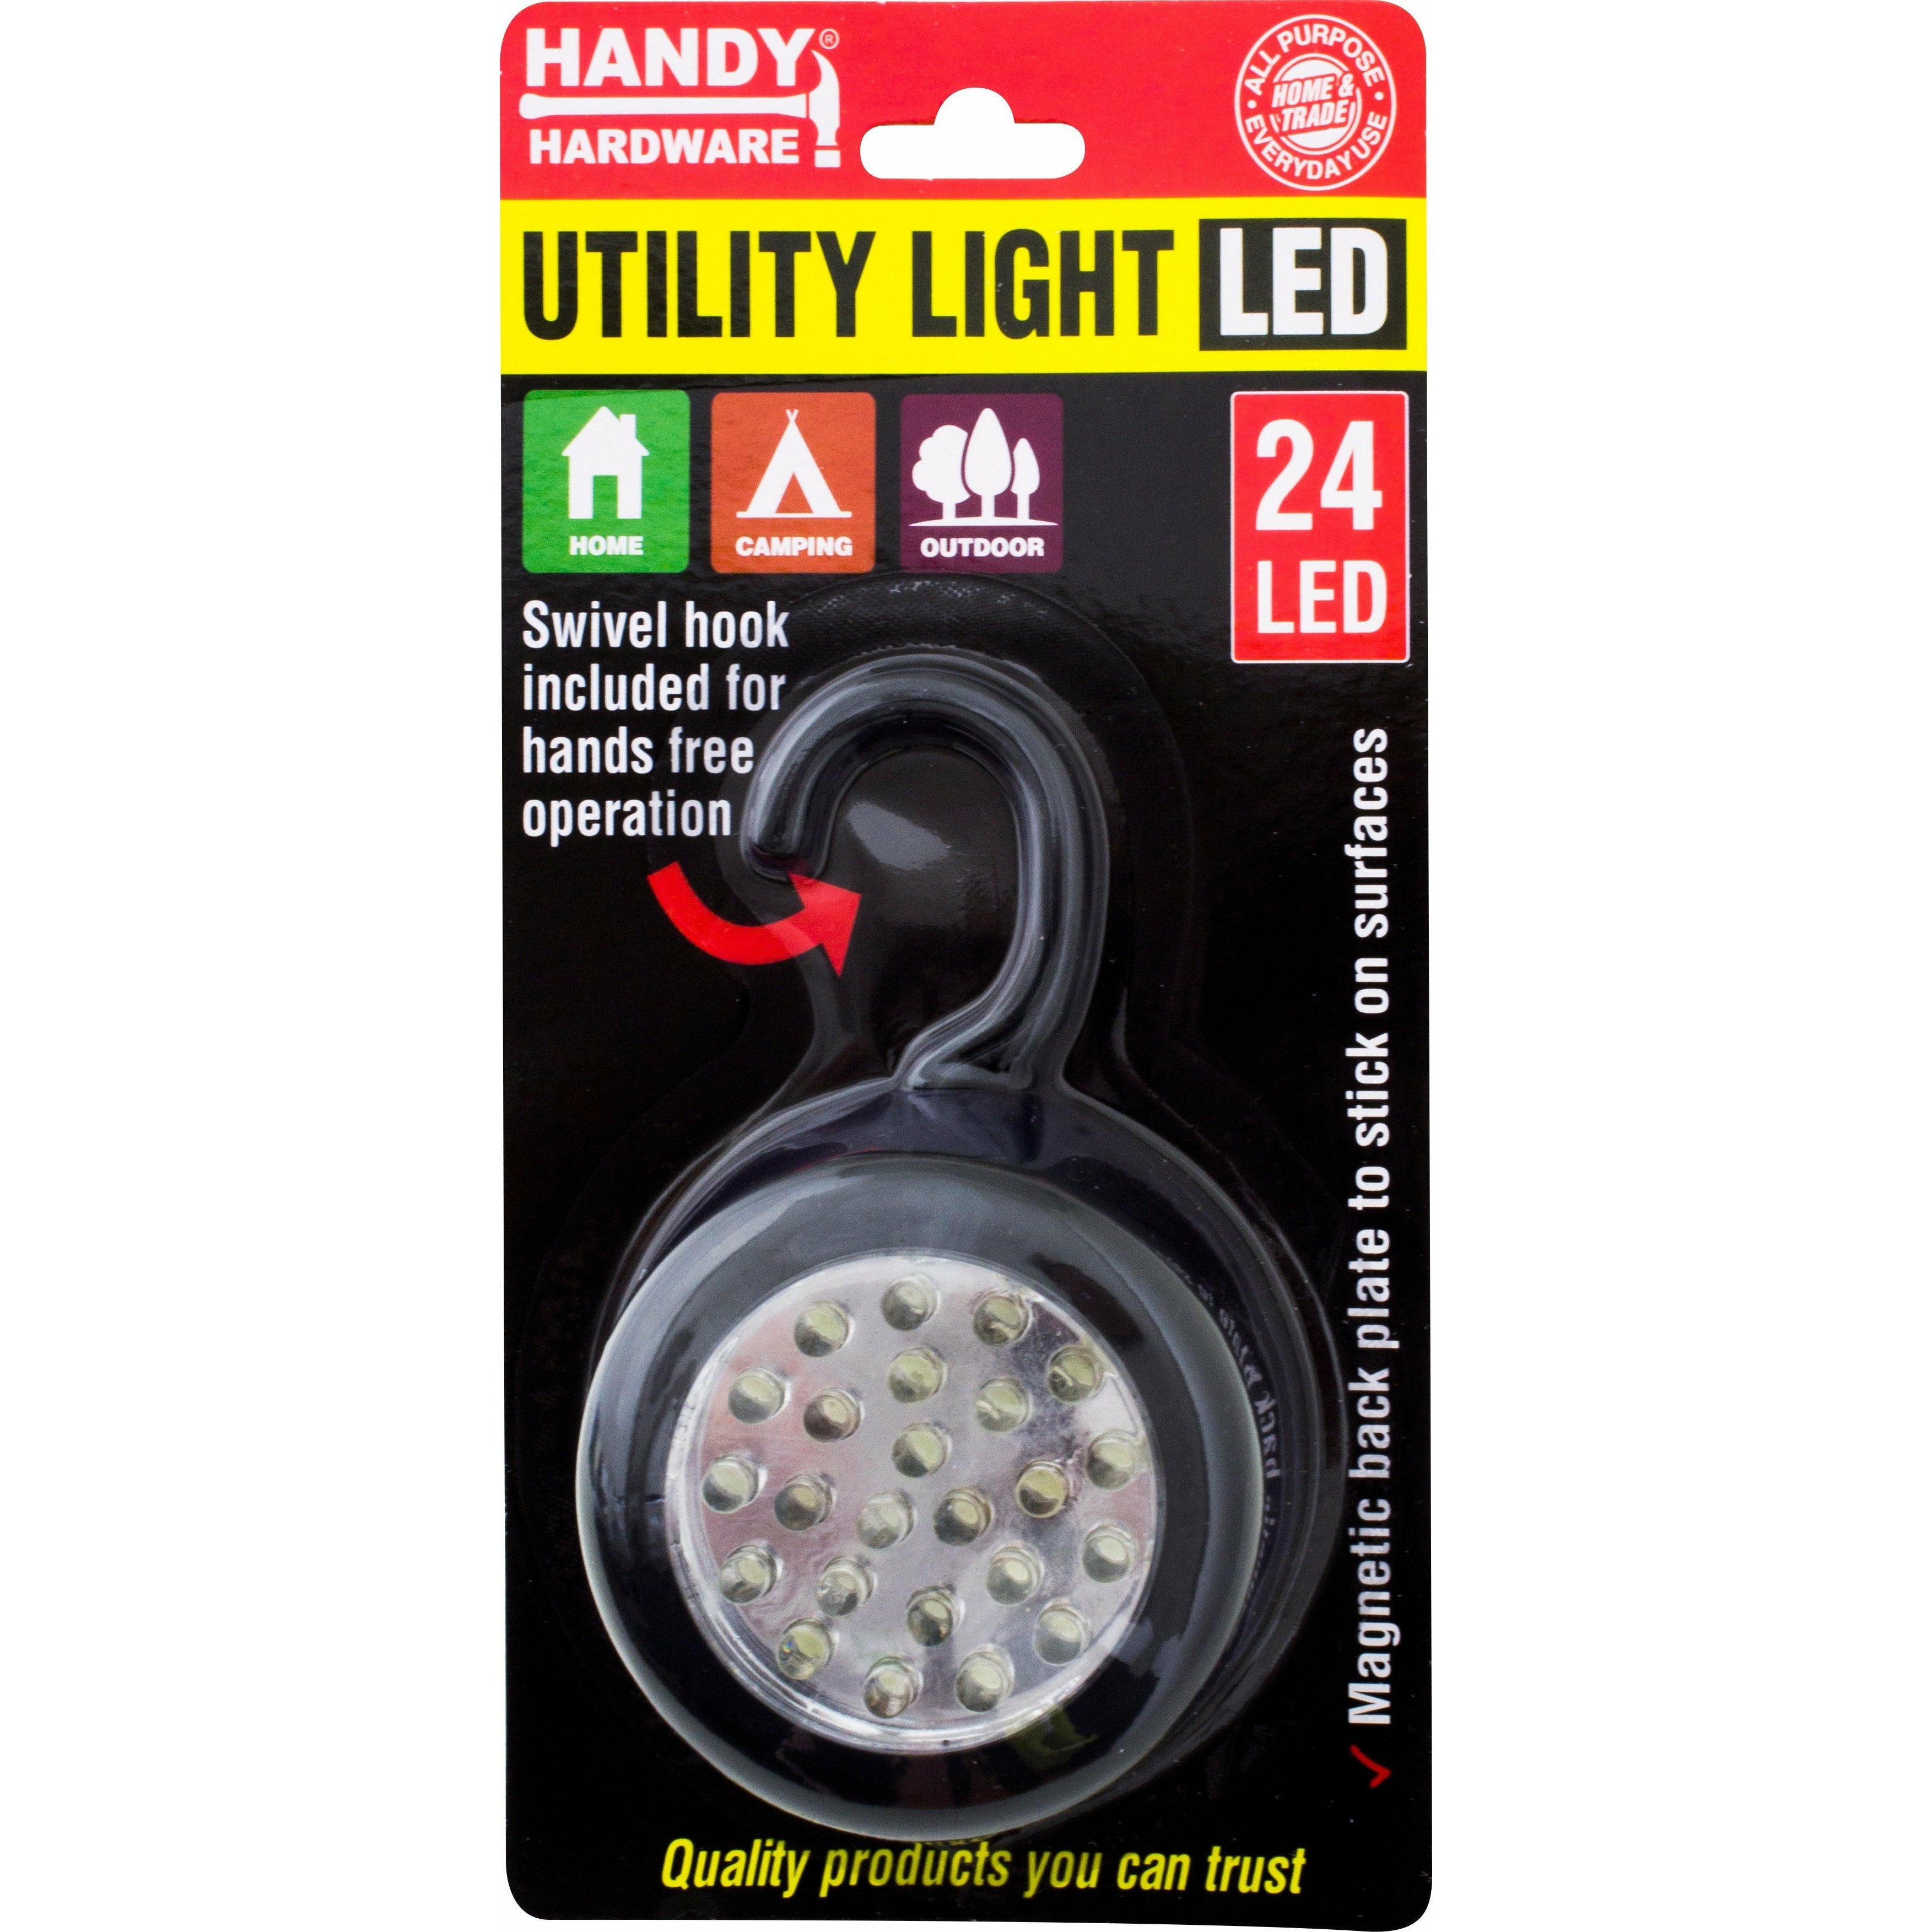 Utility LED Light with Swivel Hook - 24 LED 1 Piece Default Title